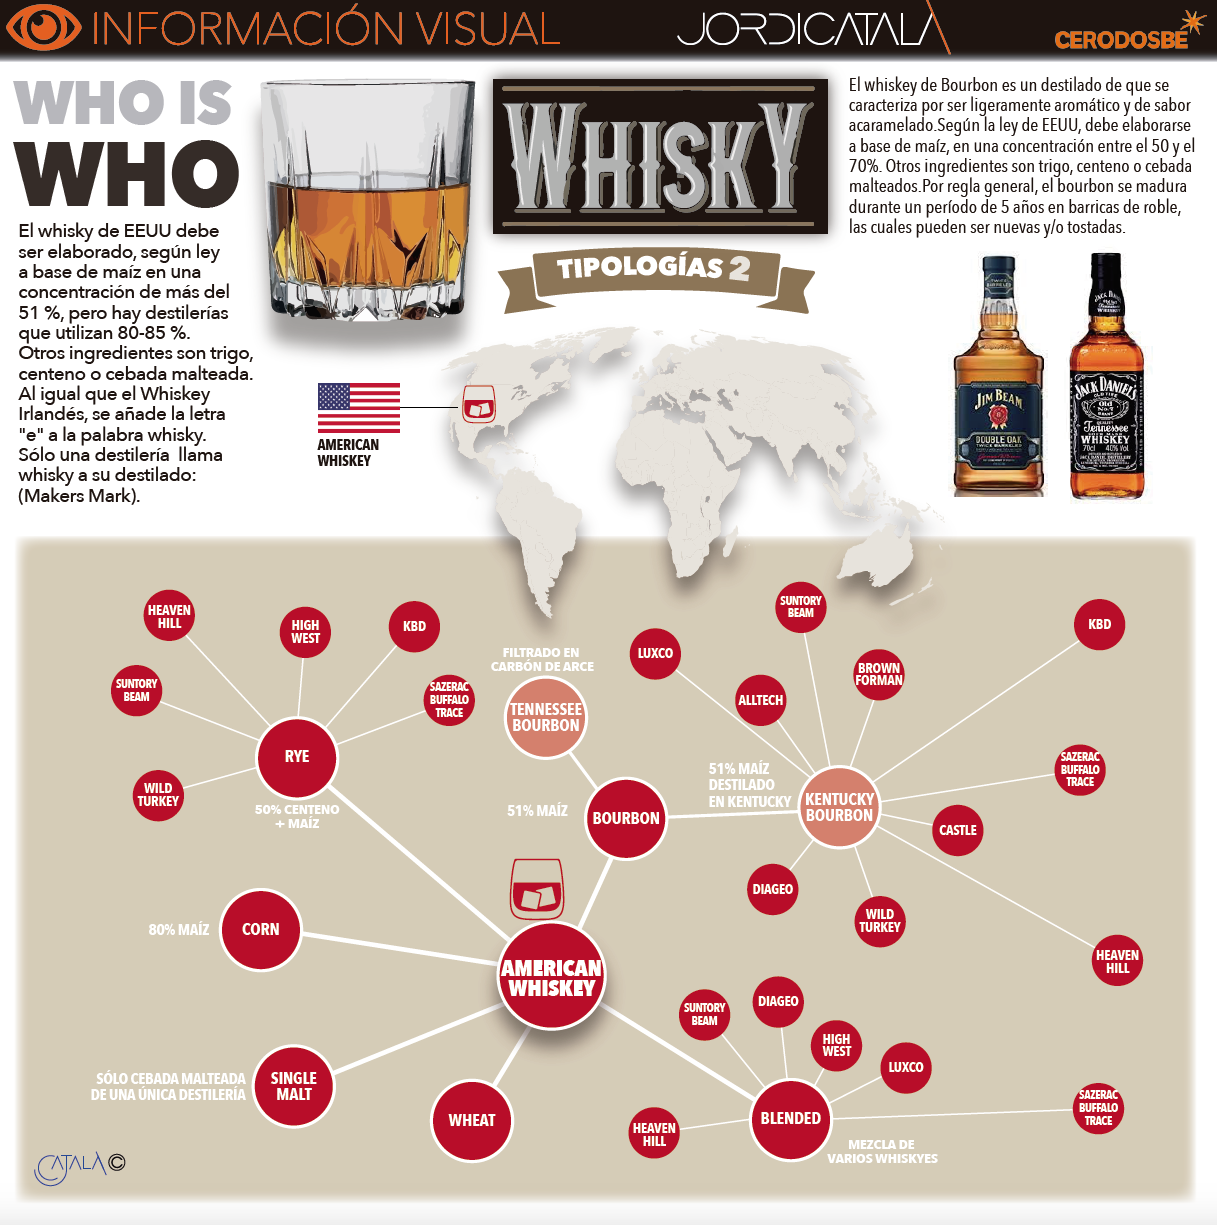 Виски какой род в русском языке. Виски. Карта виски. Классификация американского виски. Страны производители виски.